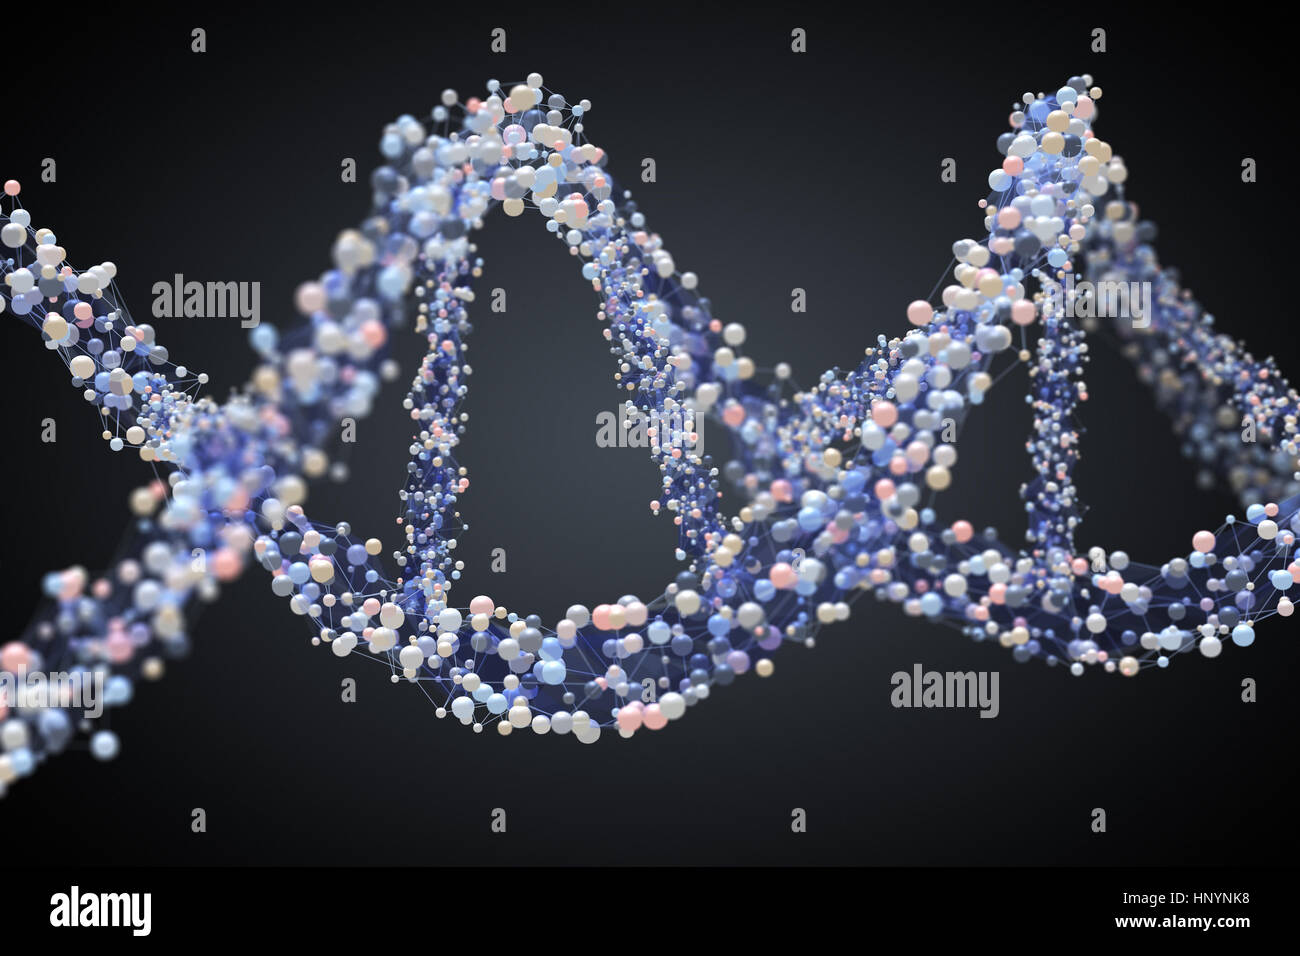 Spiral strand of DNA on the dark background. 3D illustration Stock Photo